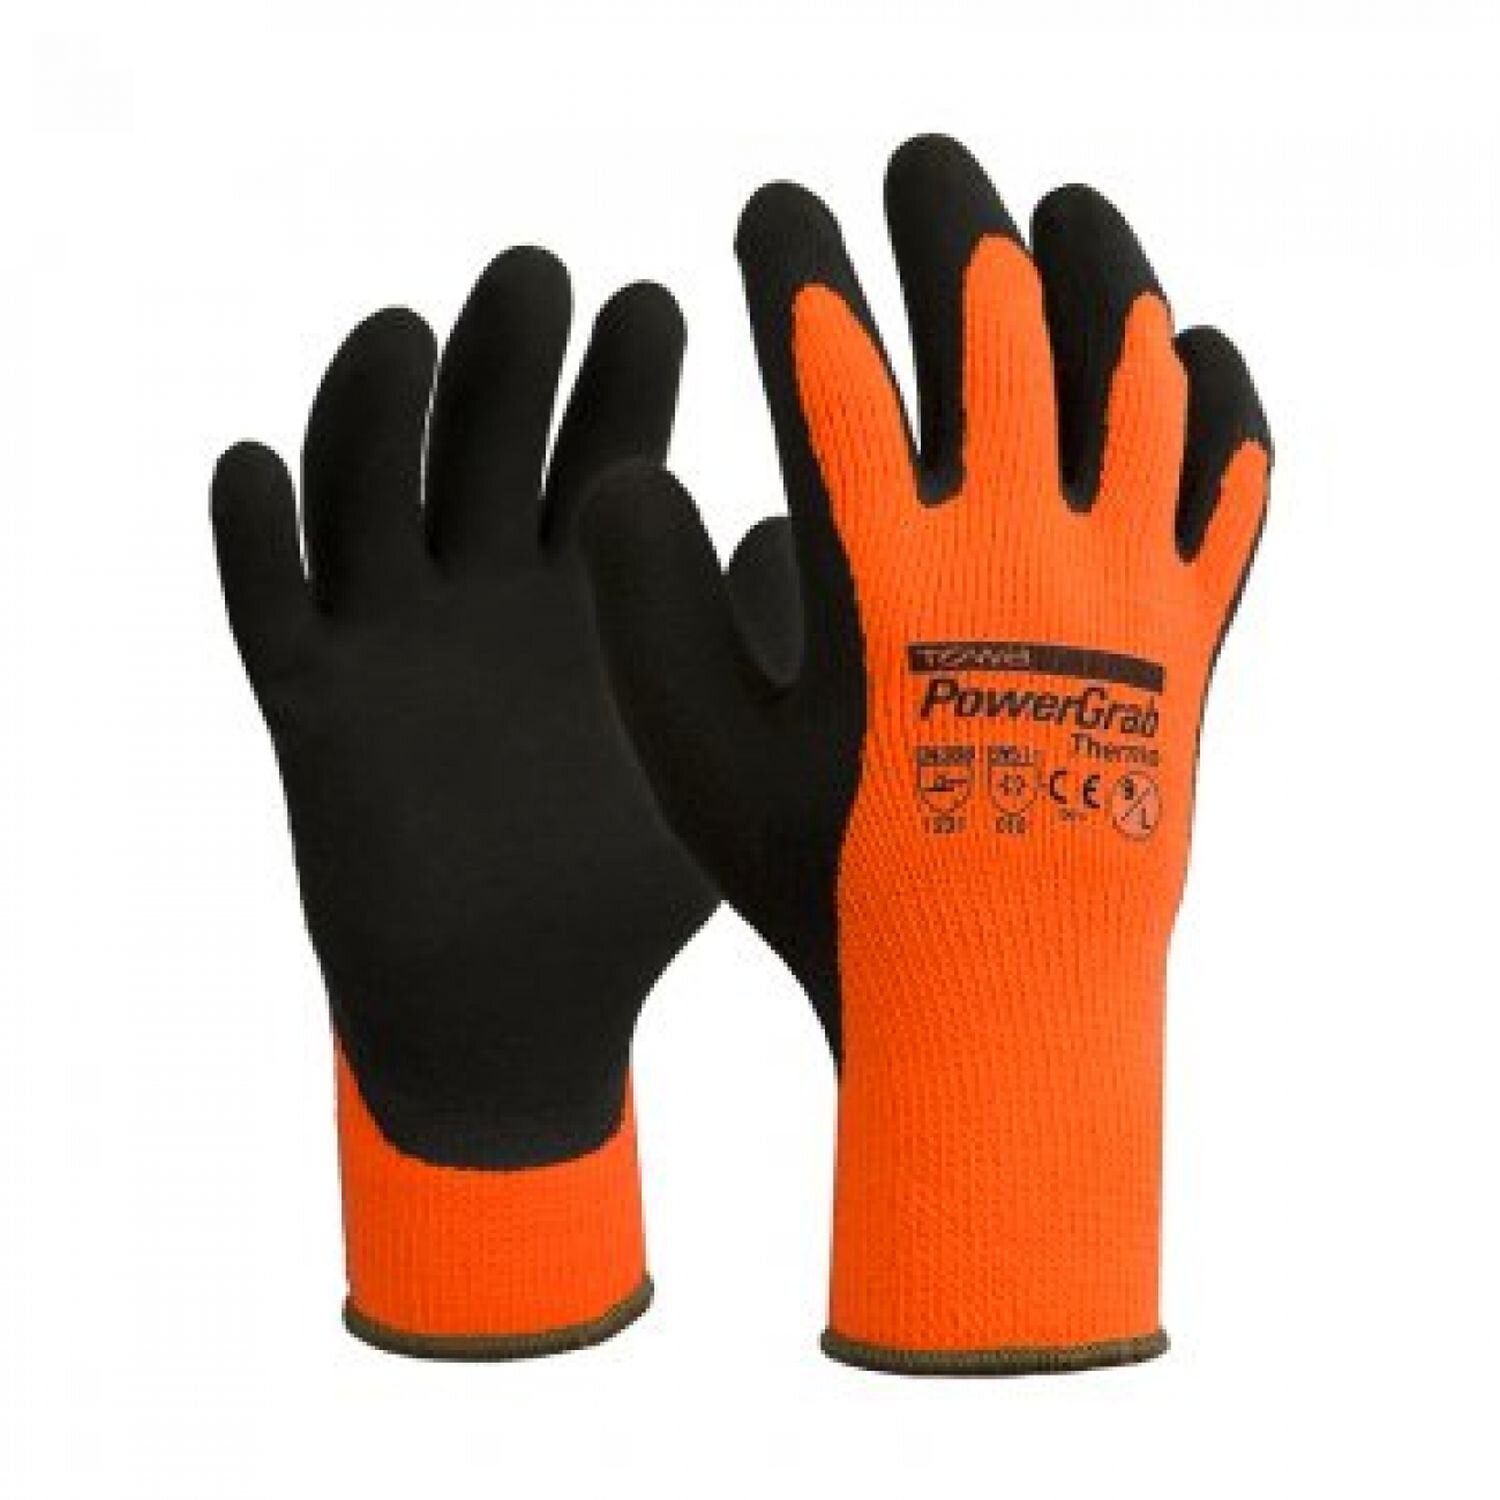 PowerGrab Thermo Winter Gloves Grey/Orange (Pkt 6)